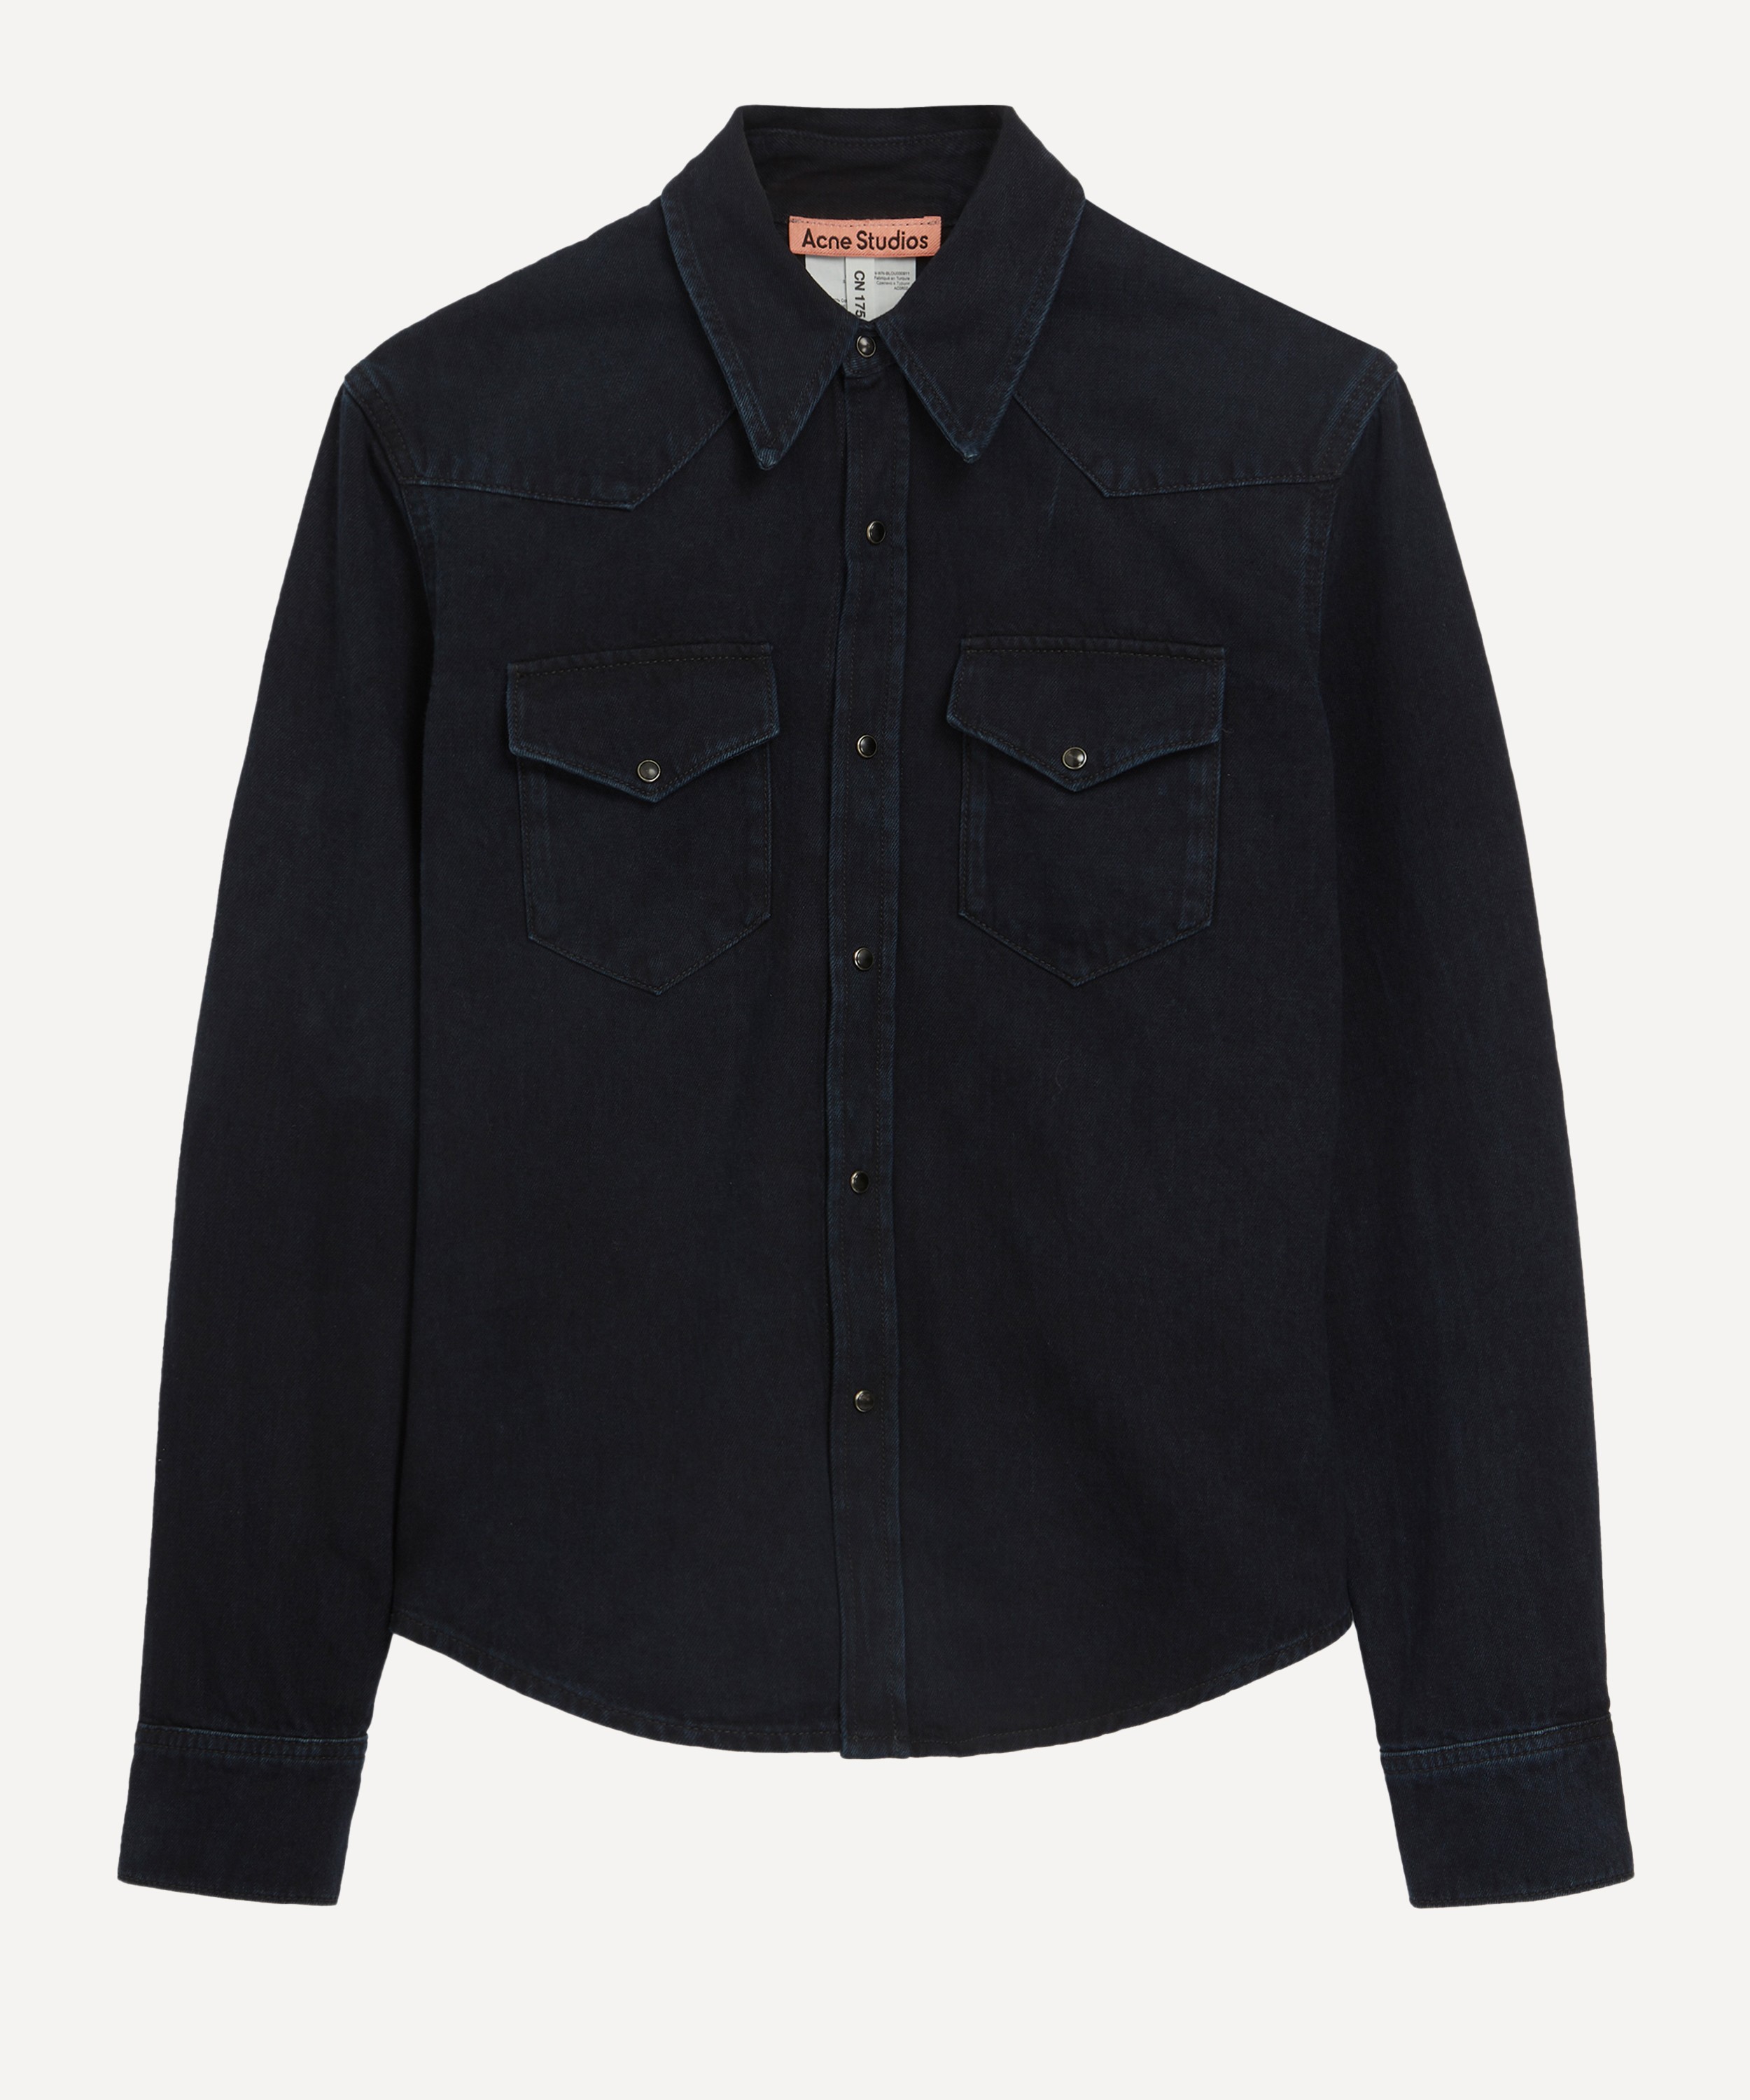 Acne Studios - Black Denim Button-Up Shirt